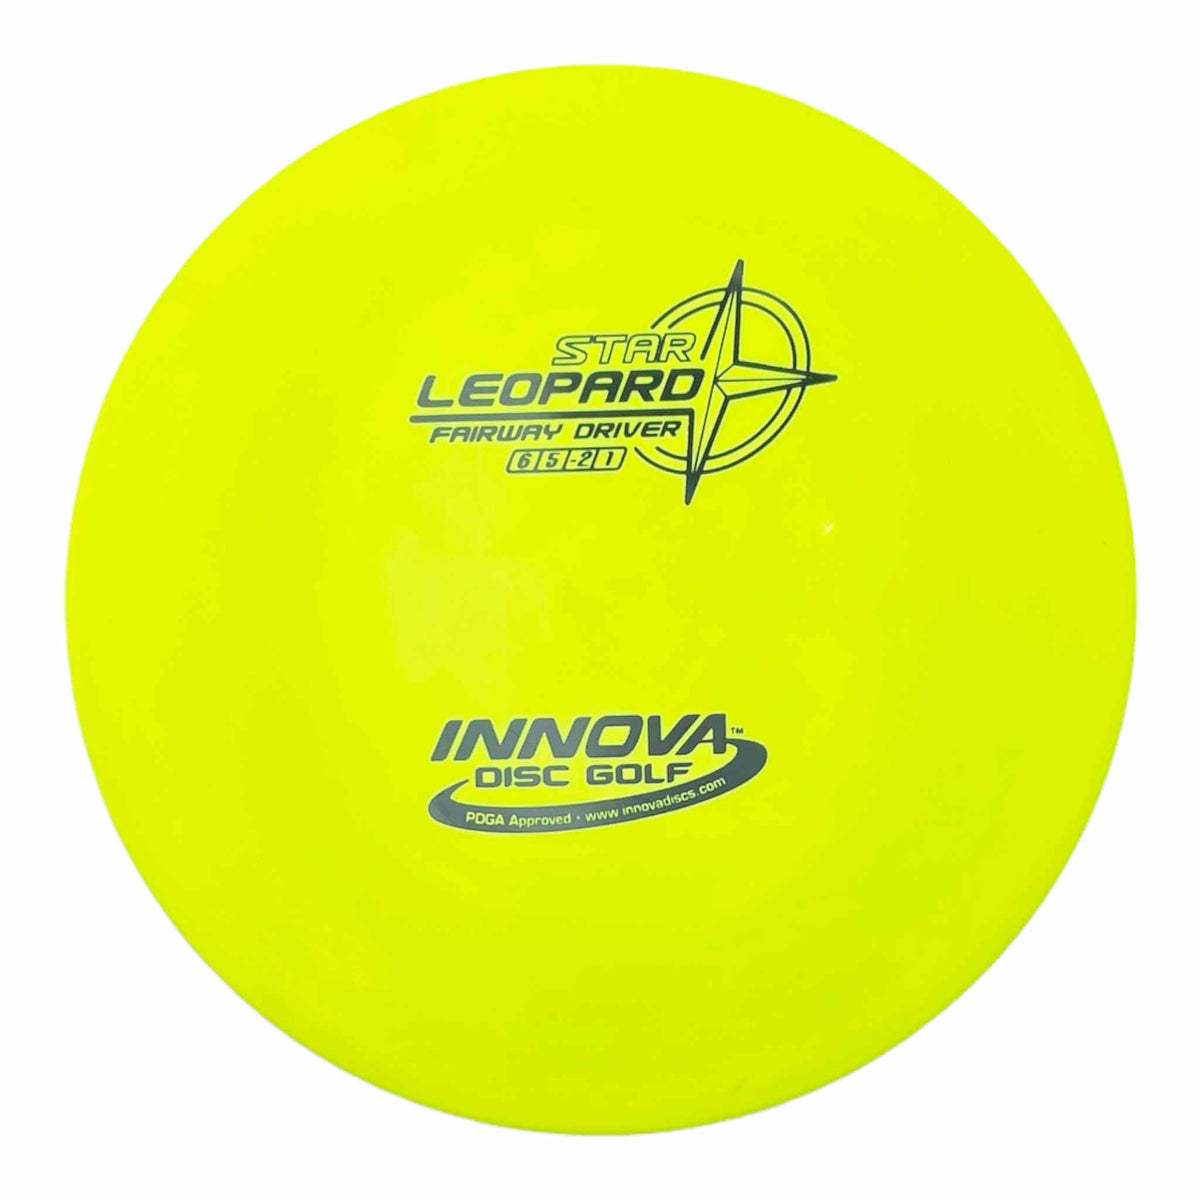 Innova Disc Golf Star Leopard fairway driver - Yellow